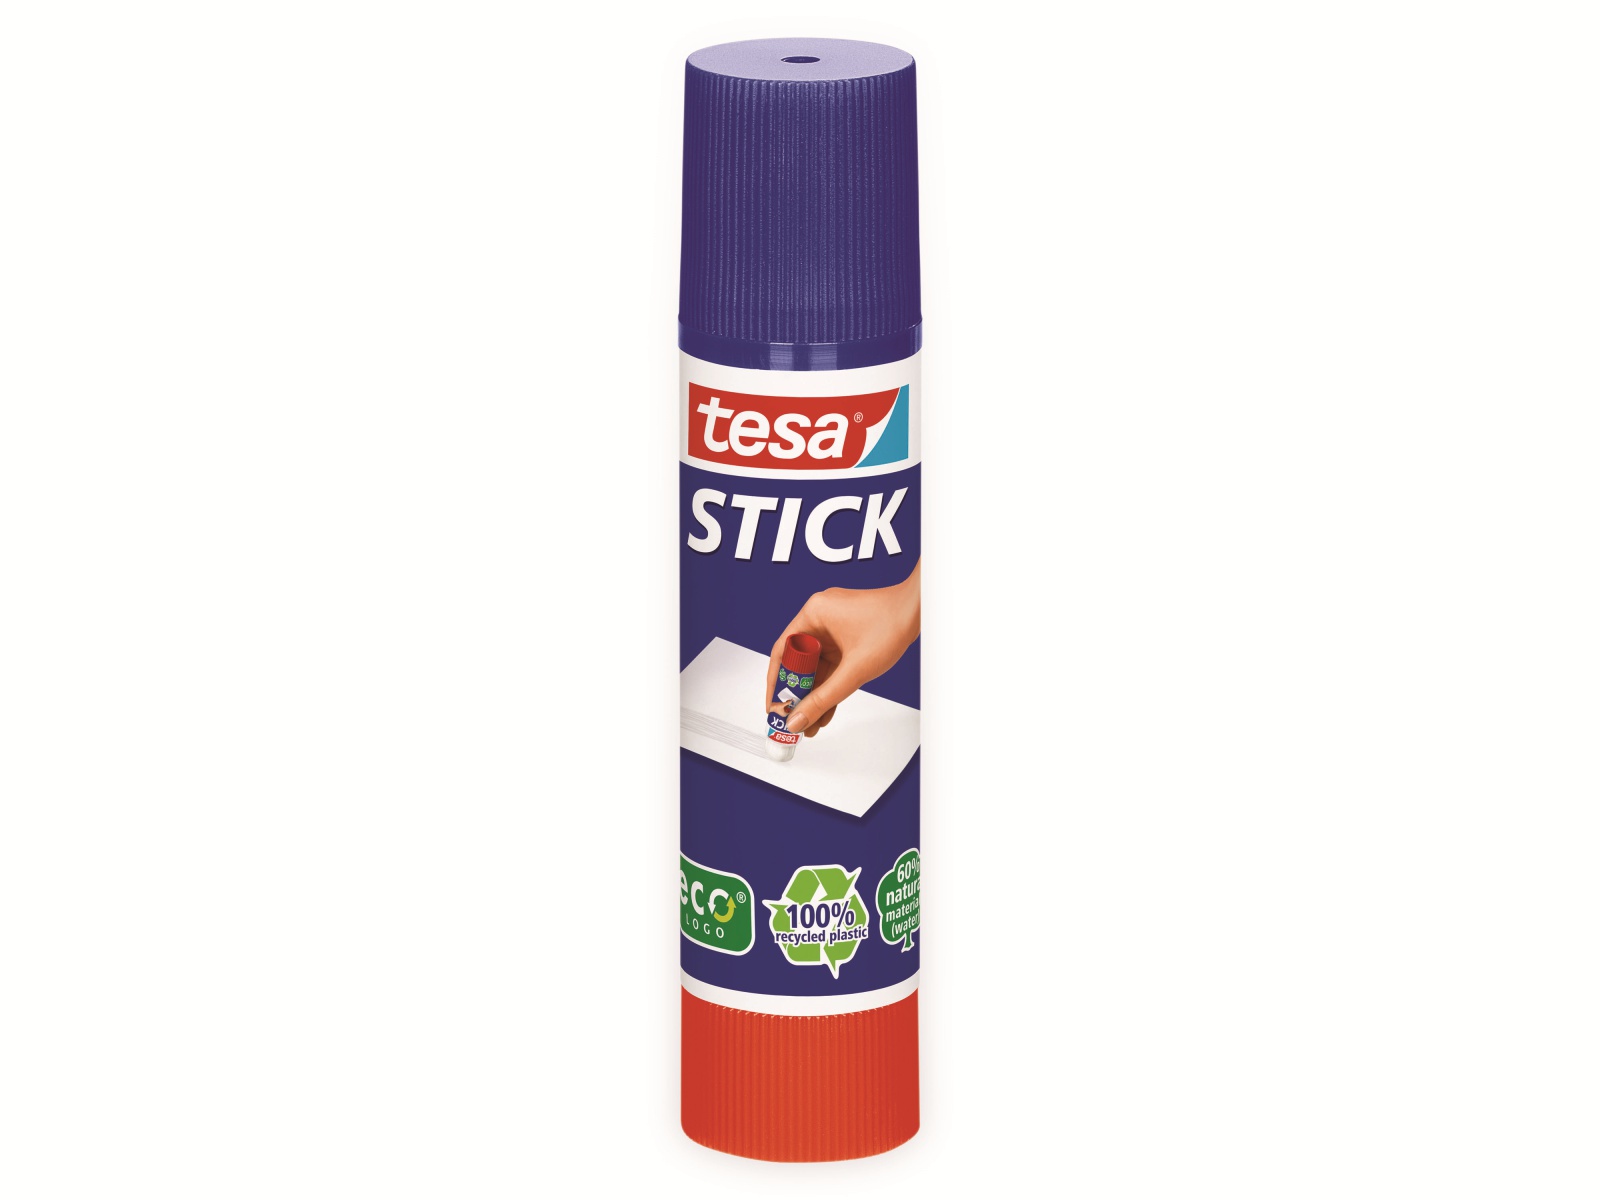 TESA ® Klebstift Stick ecoLogo 10 g, 57024-00200-03